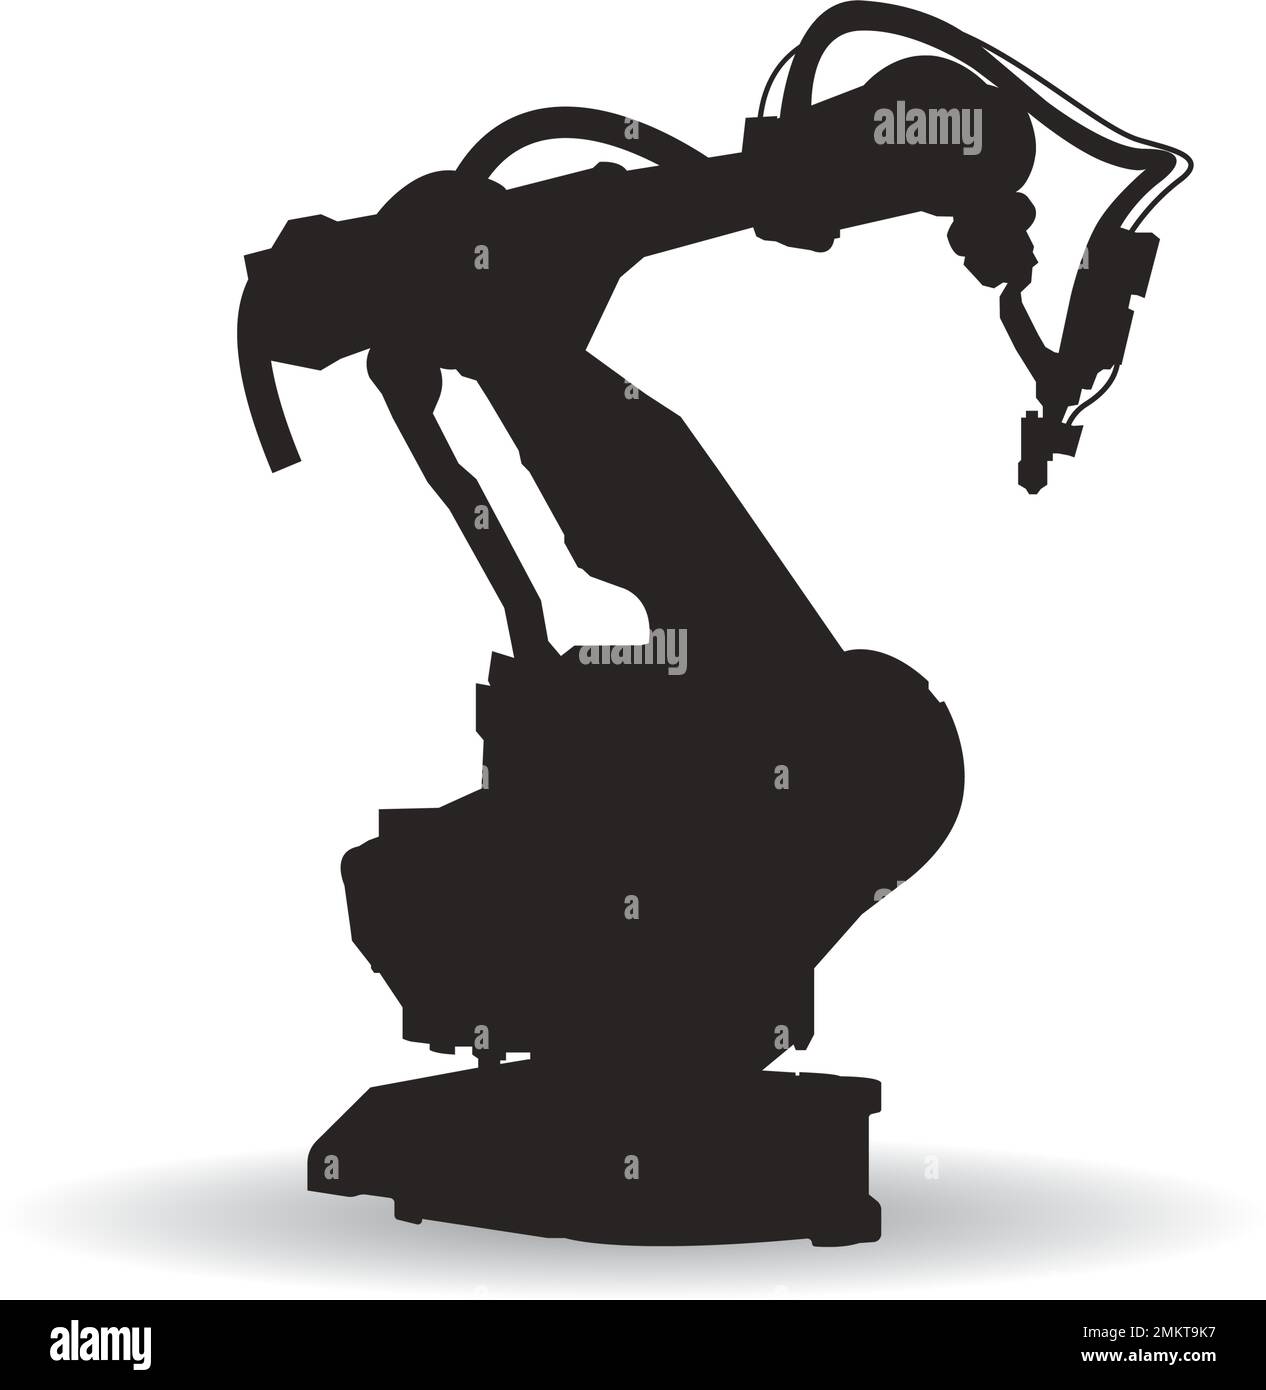 industrial robot logo,vector illustration design template. Stock Vector